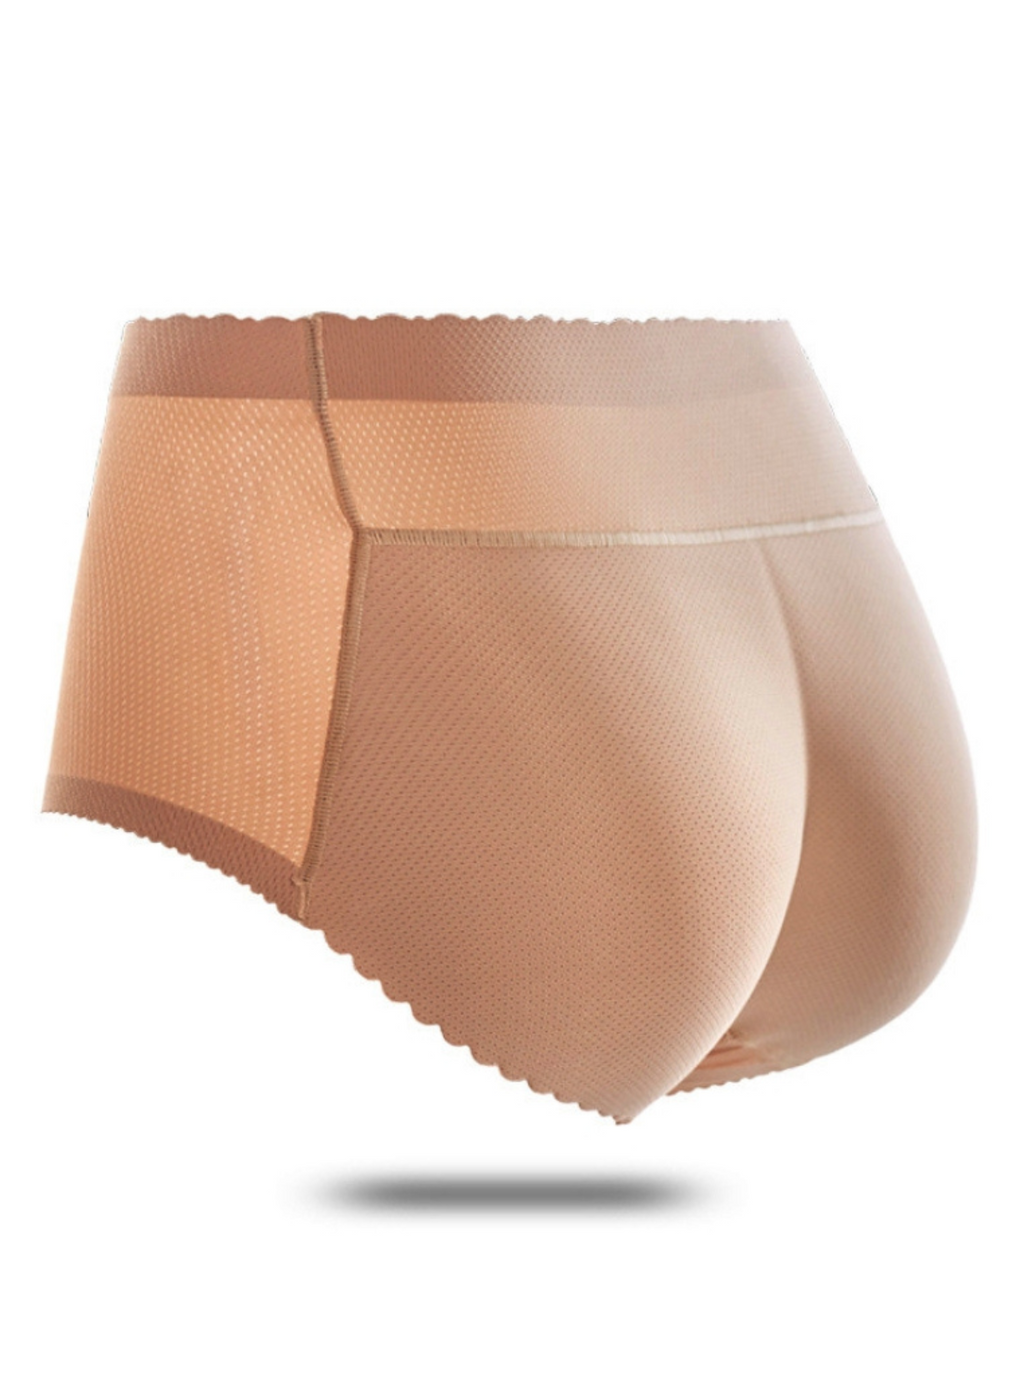 booty underwear - Buy booty underwear at Best Price in Malaysia